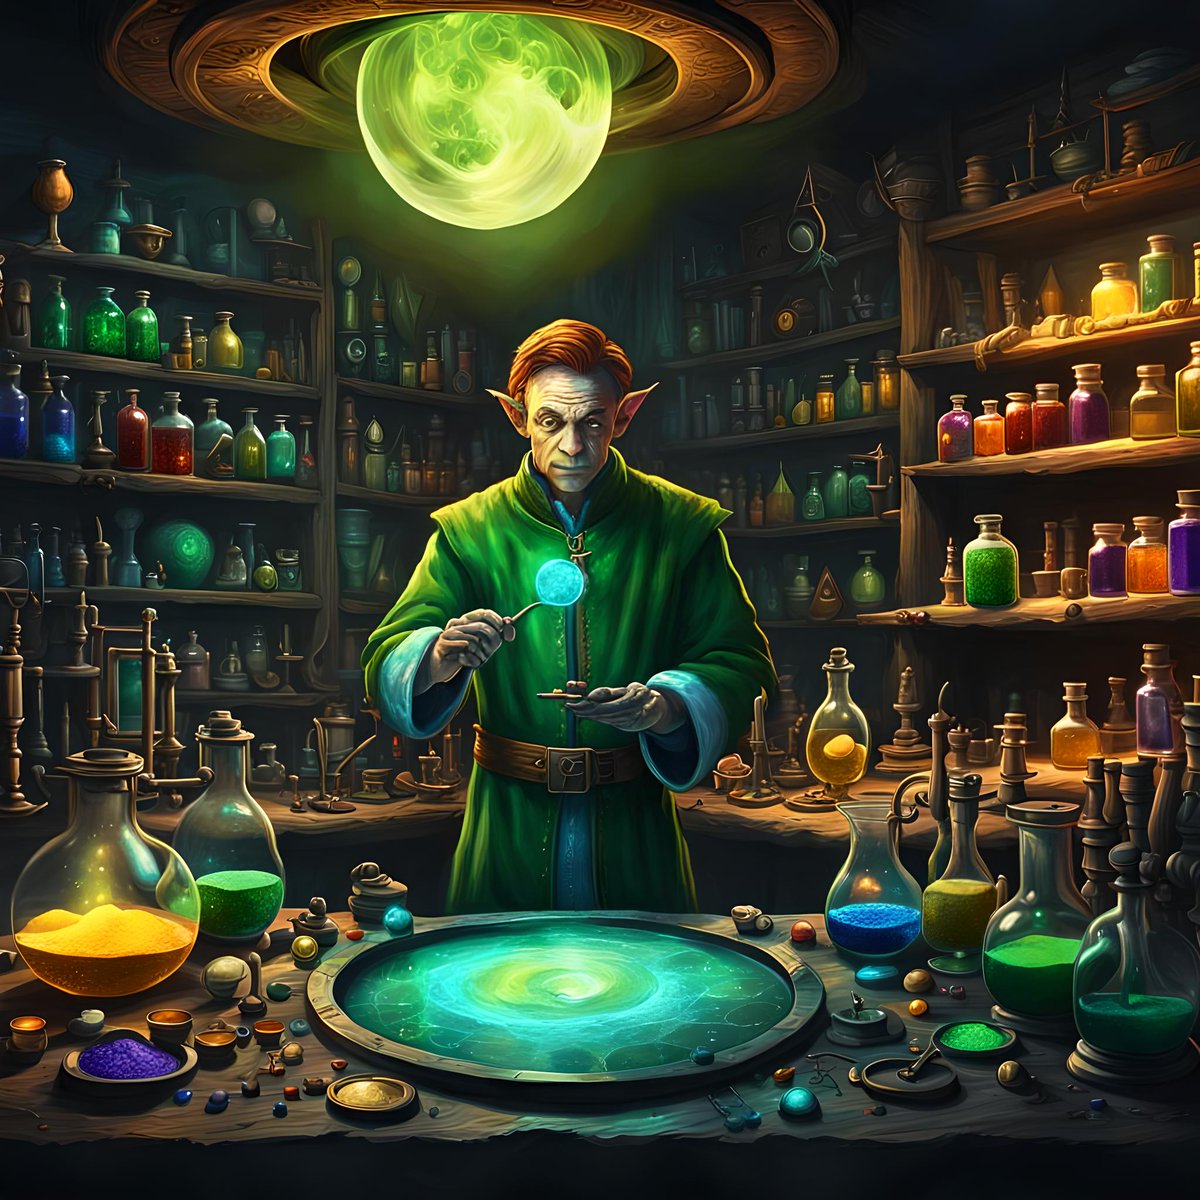 Mystical mixtures and elven wonders in the alchemy lab! 🧝‍♂️🧪✨

#ElfAlchemy #MagicLab #ElvenScience #PotionCrafting #MysticalMixing #EnchantedLab #AlchemyMagic #ElfInLab #ElvenPotions #MagicBrewing

#AIArt #AIGenerated #MachineLearningArt #DigitalArt #AIInArt #CreativeAI